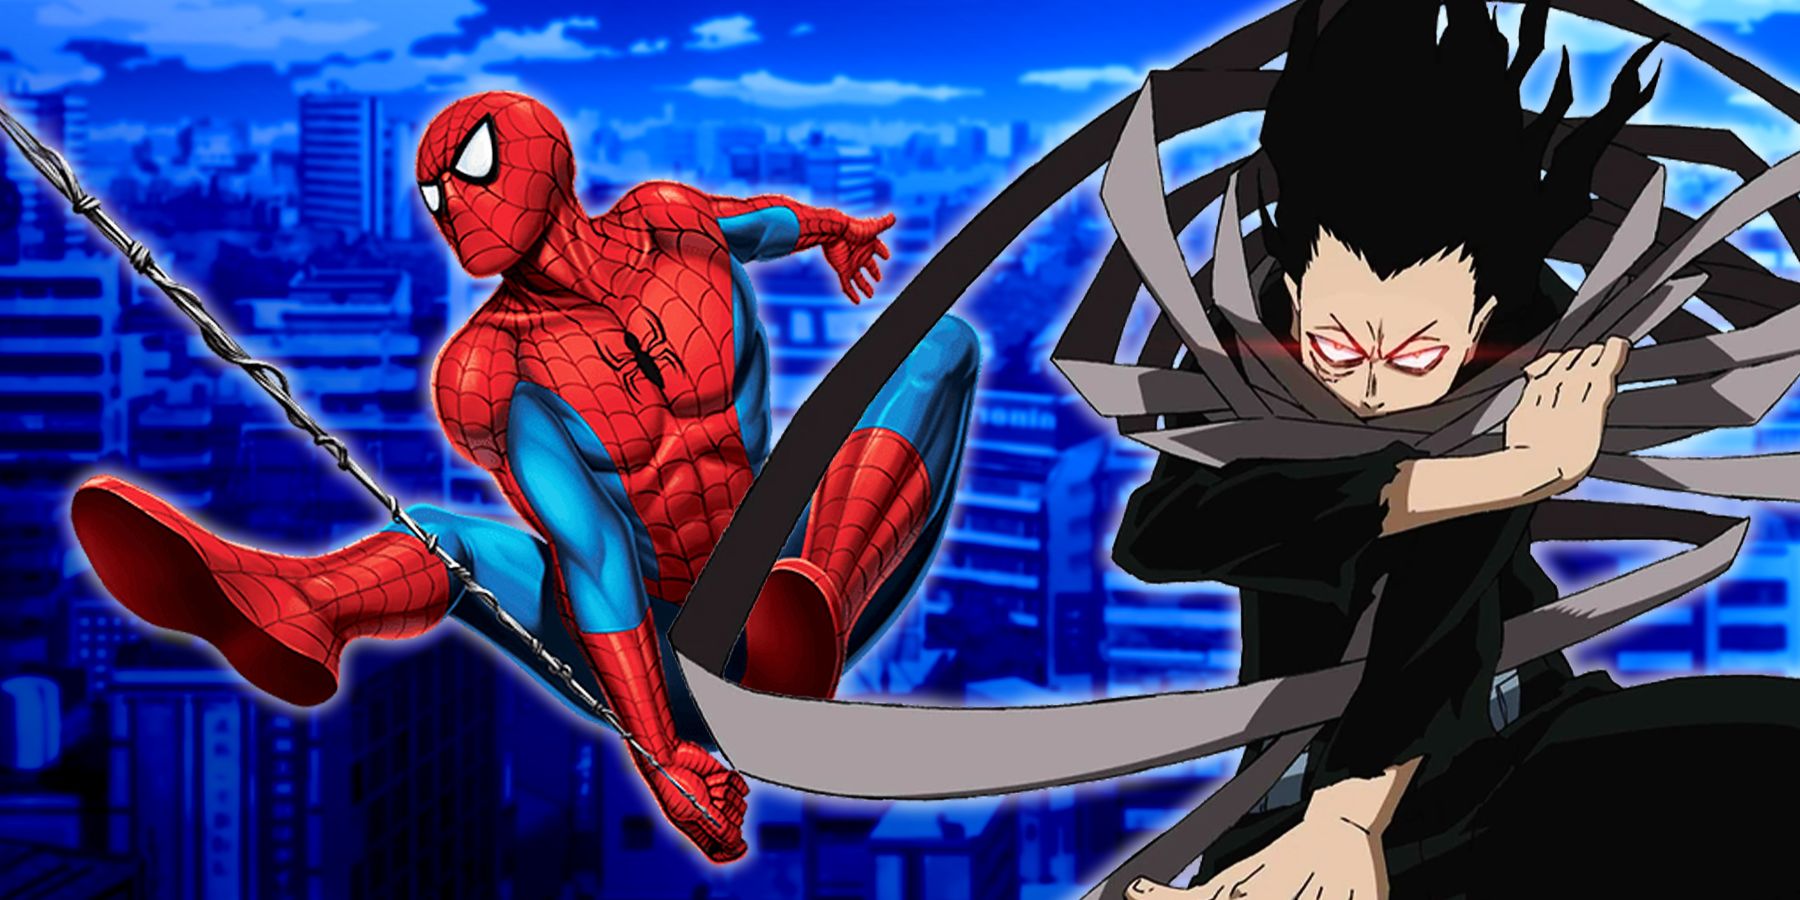 Spider-Man and Aizawa from My Hero Academia